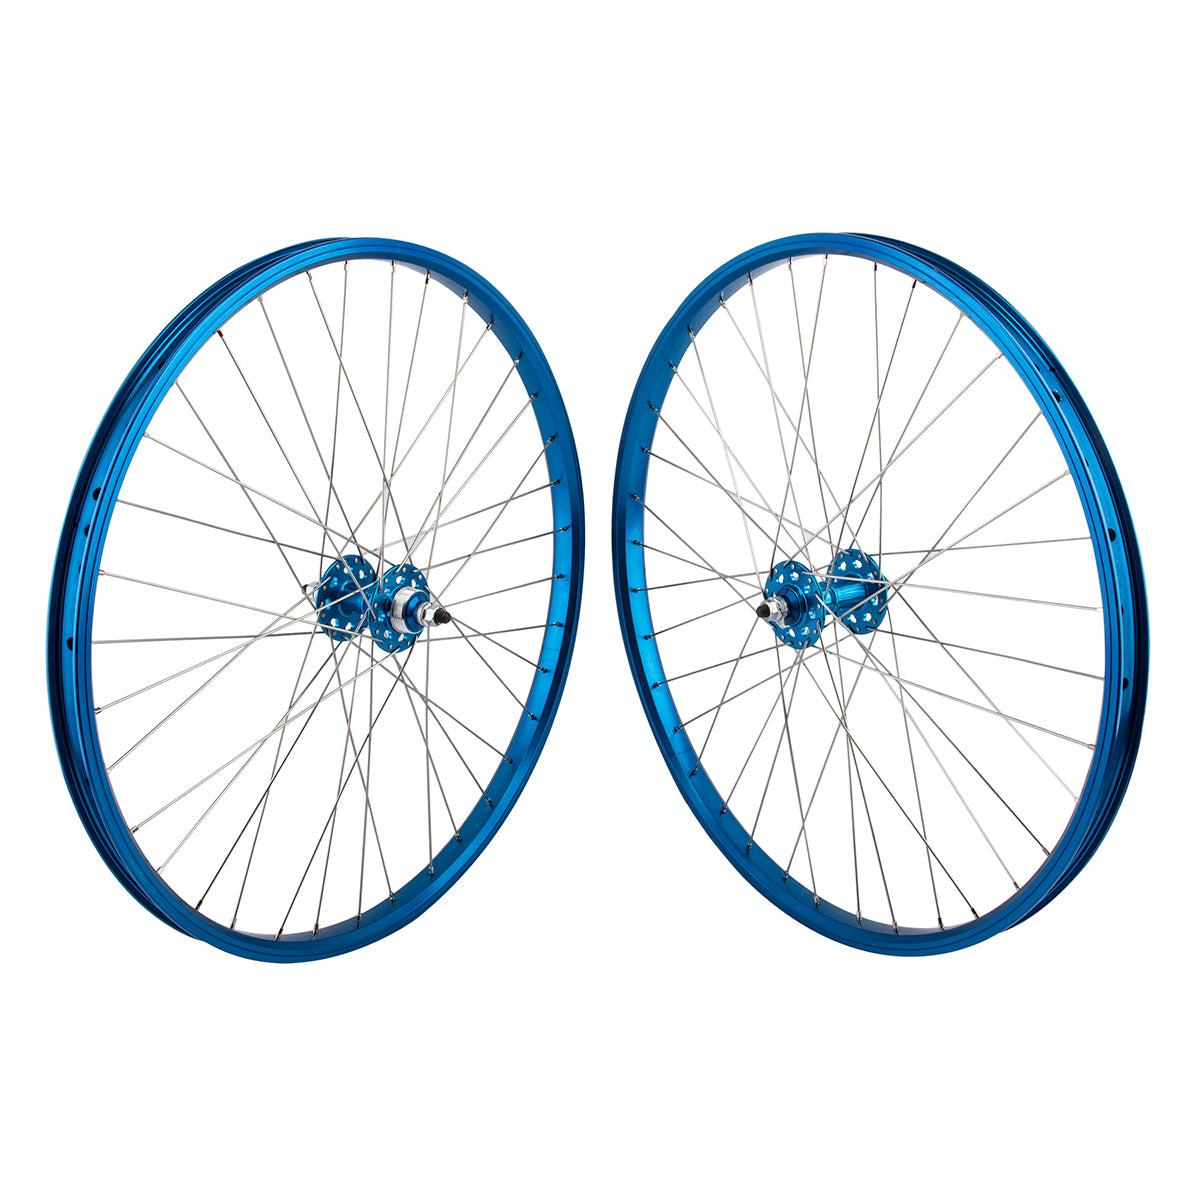 26" SE Racing Wheelset - Pair - 36H - Double Wall - Sealed Bearing - Freewheel - Blue